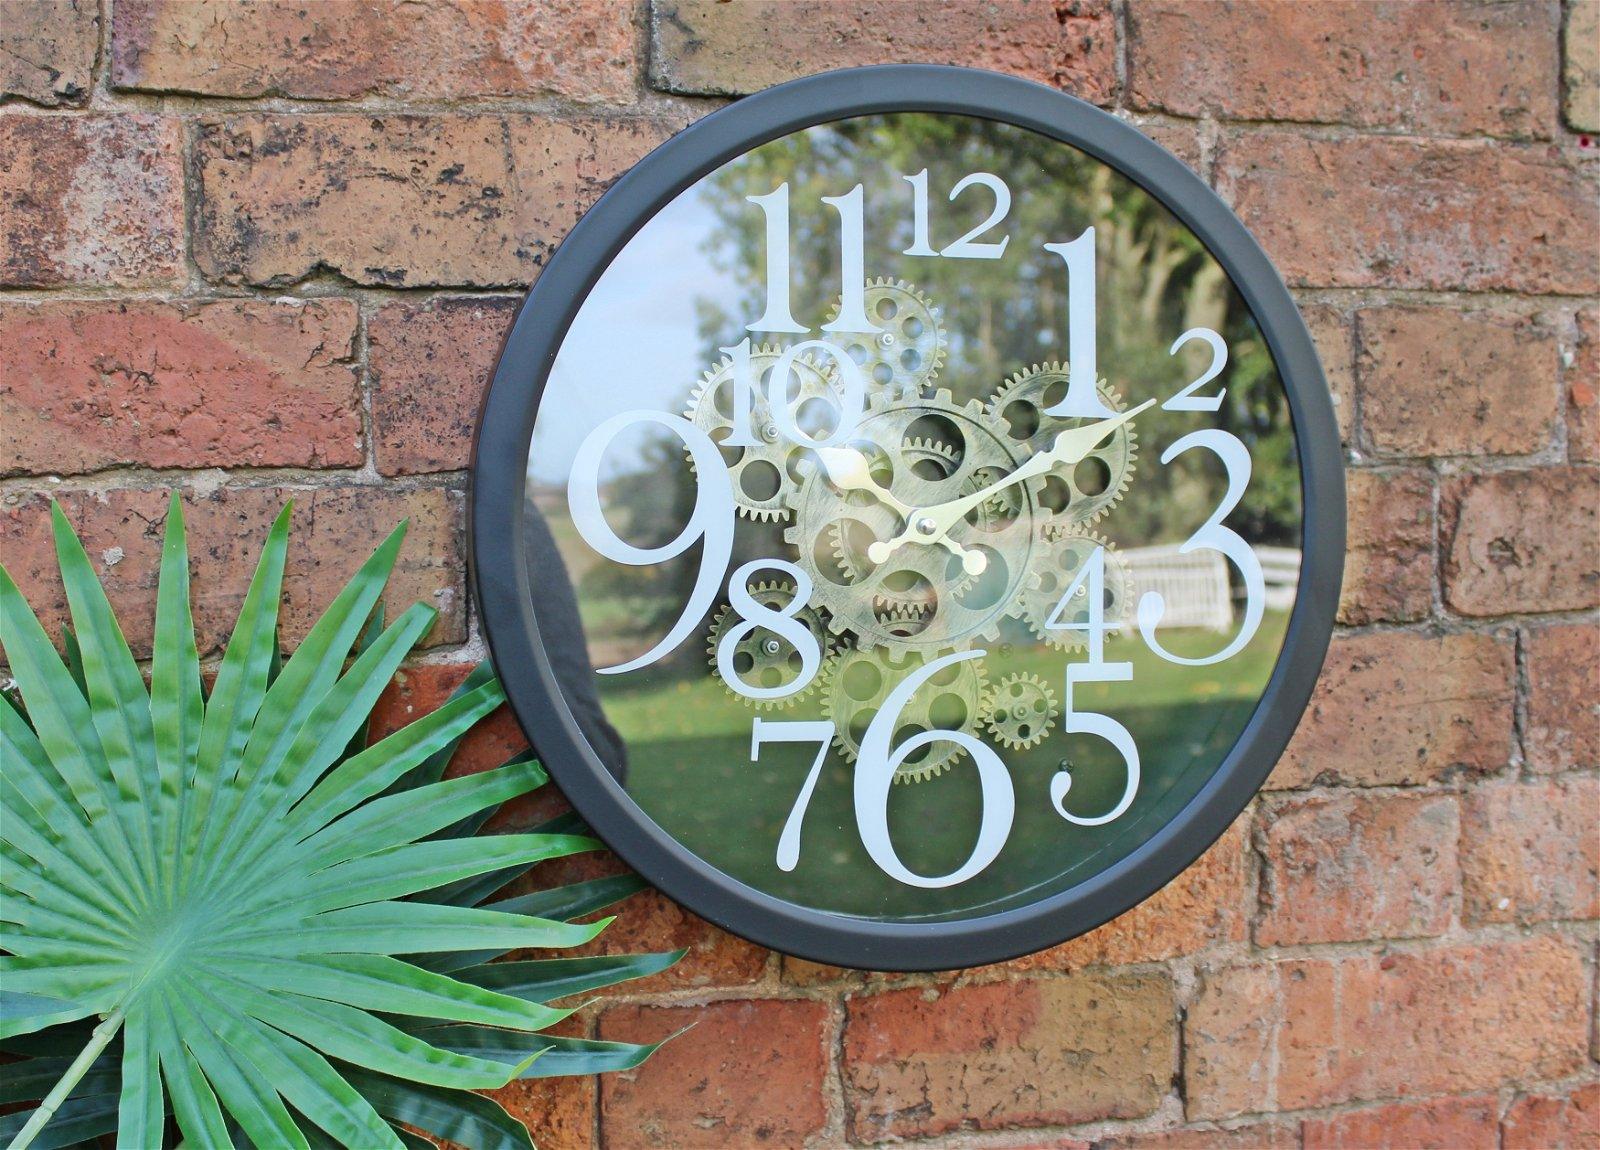 Black Metal Gear Style Clock, 38cm - £76.99 - Wall Hanging Clocks 